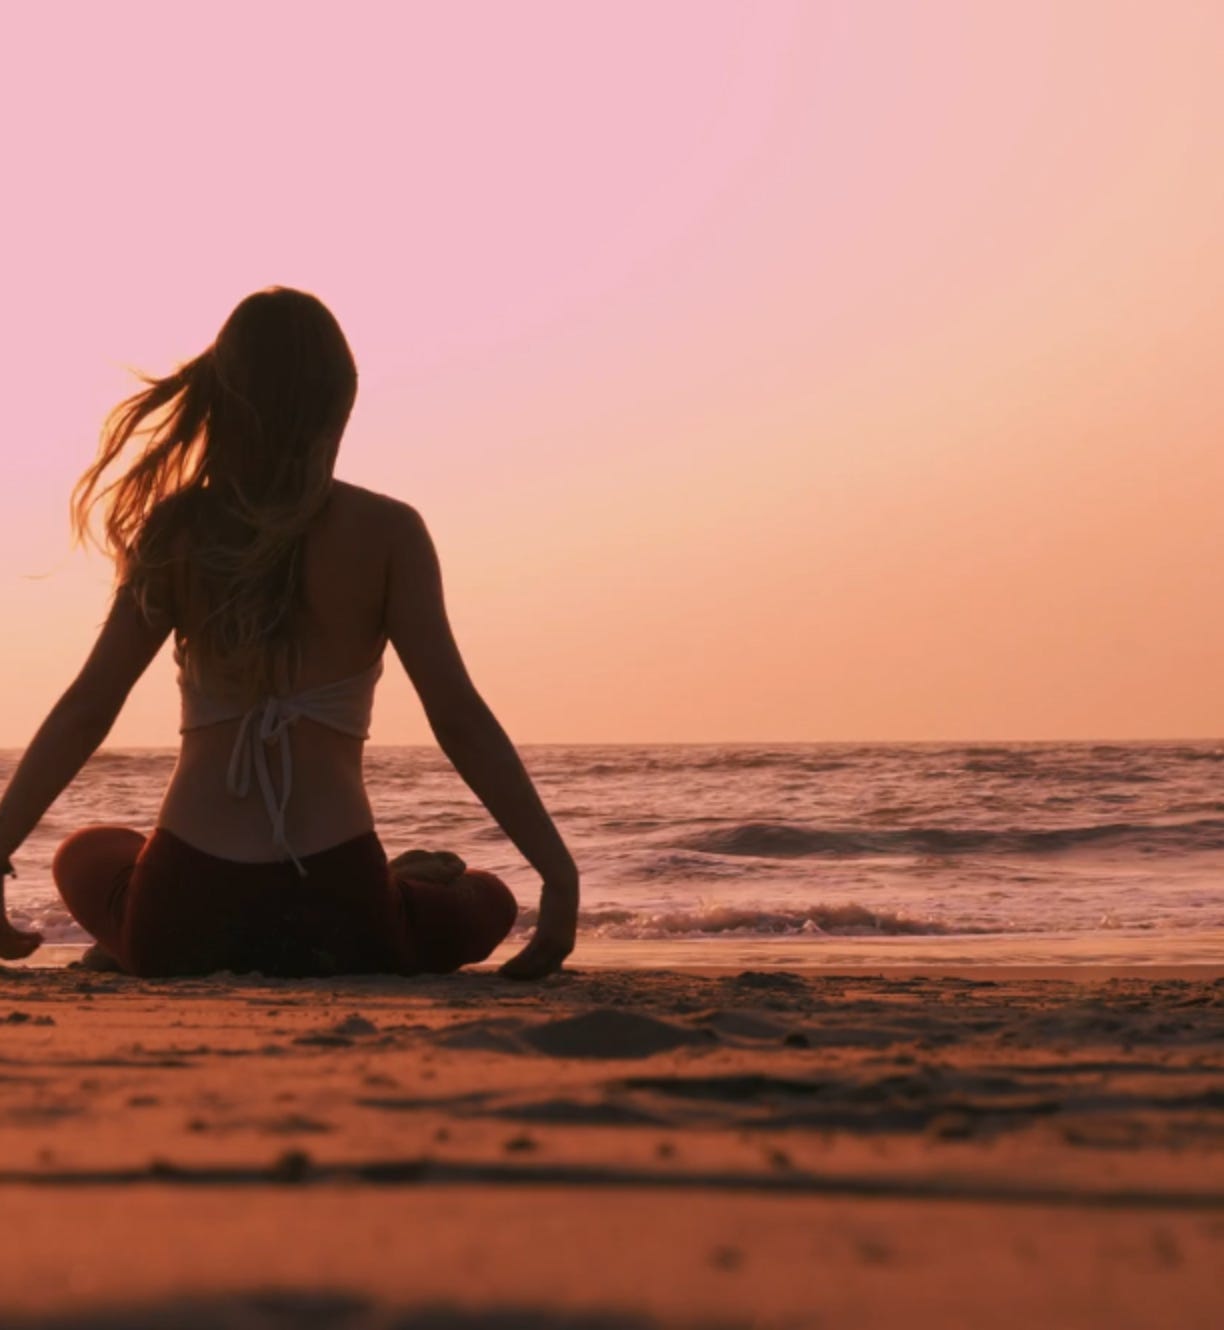 Lady practising yoga on the beach